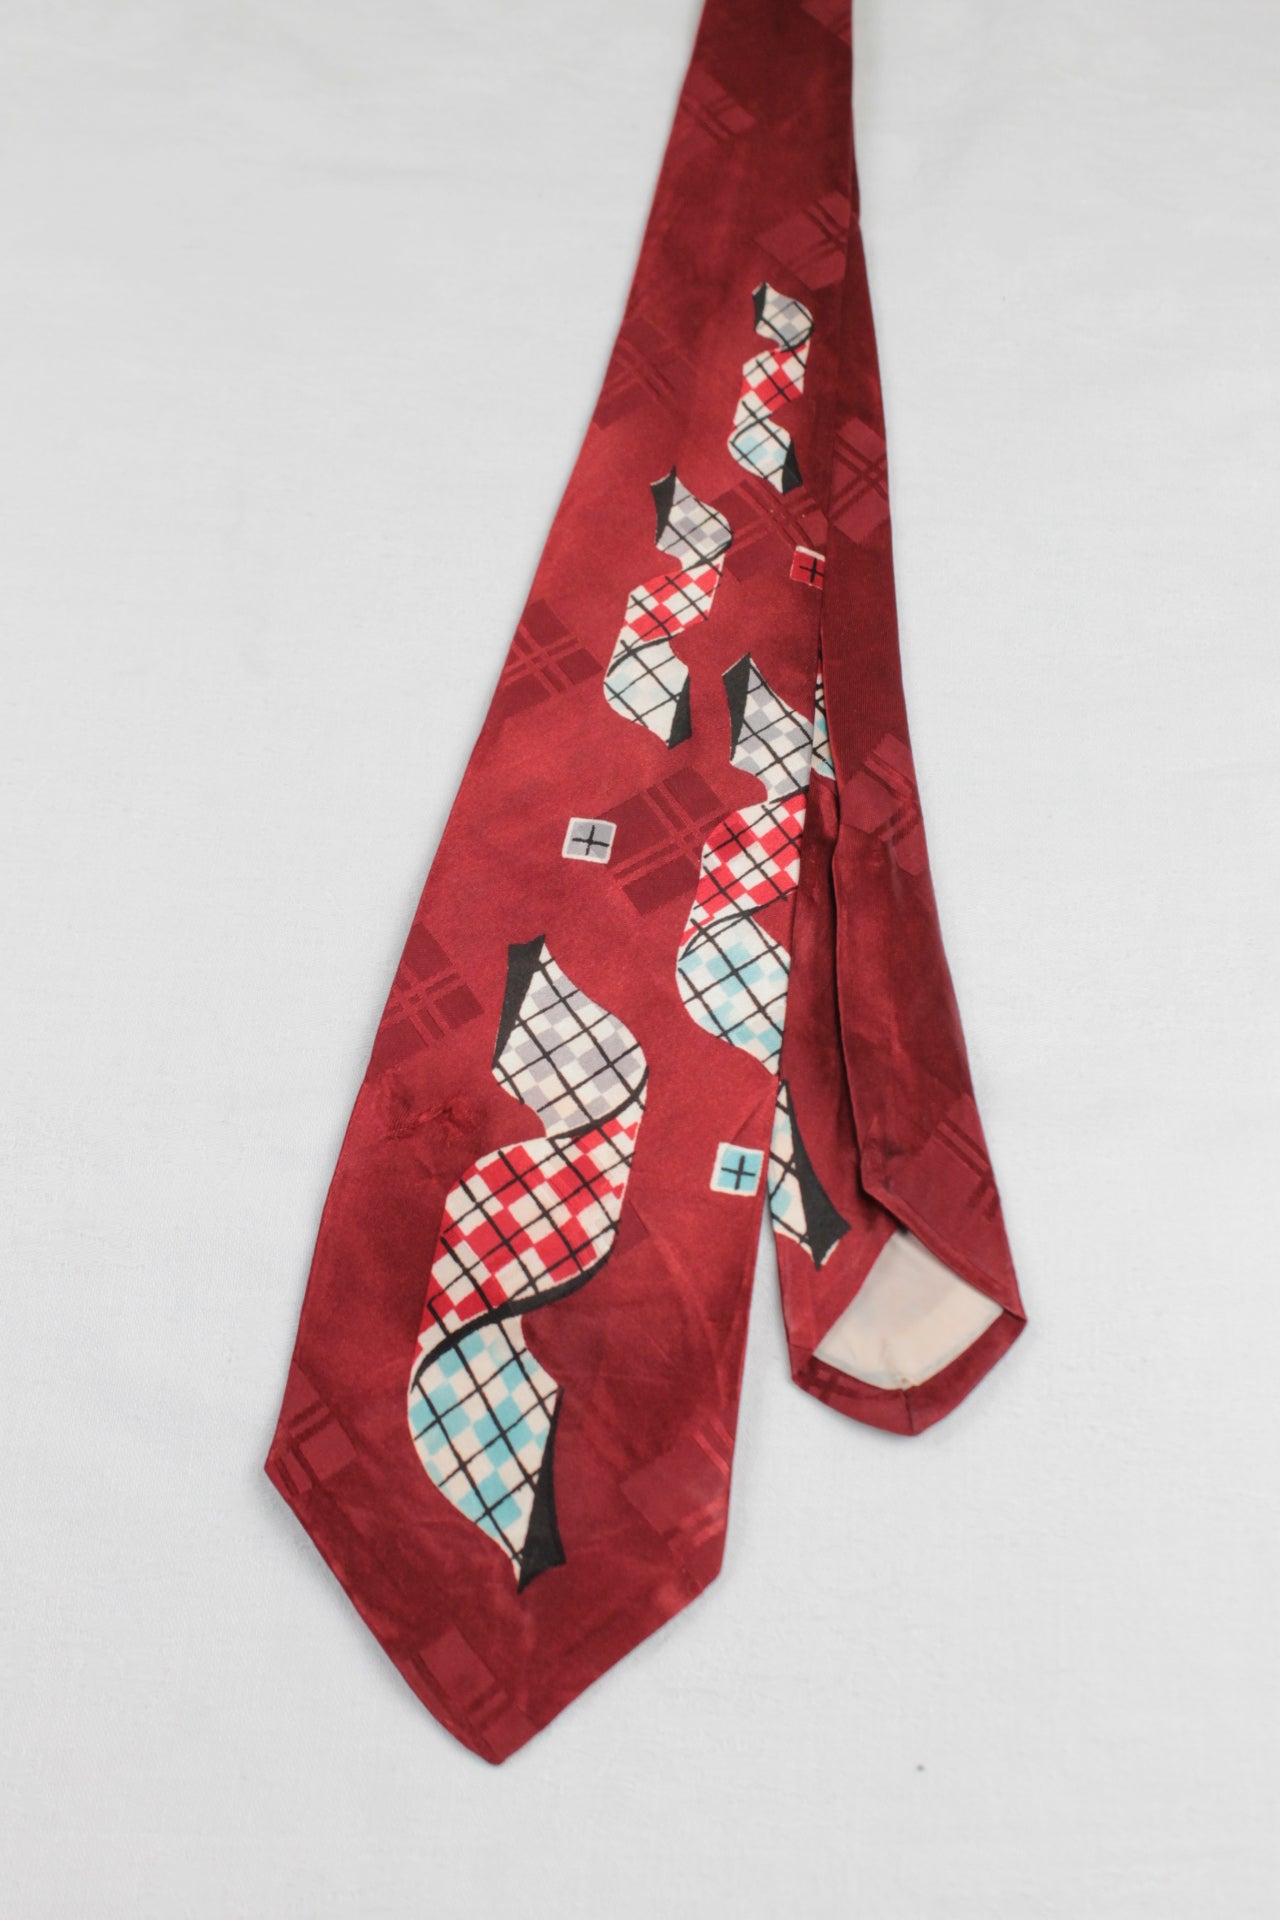 Vintage dark red blue grey pattern swing tie 1940s/50s